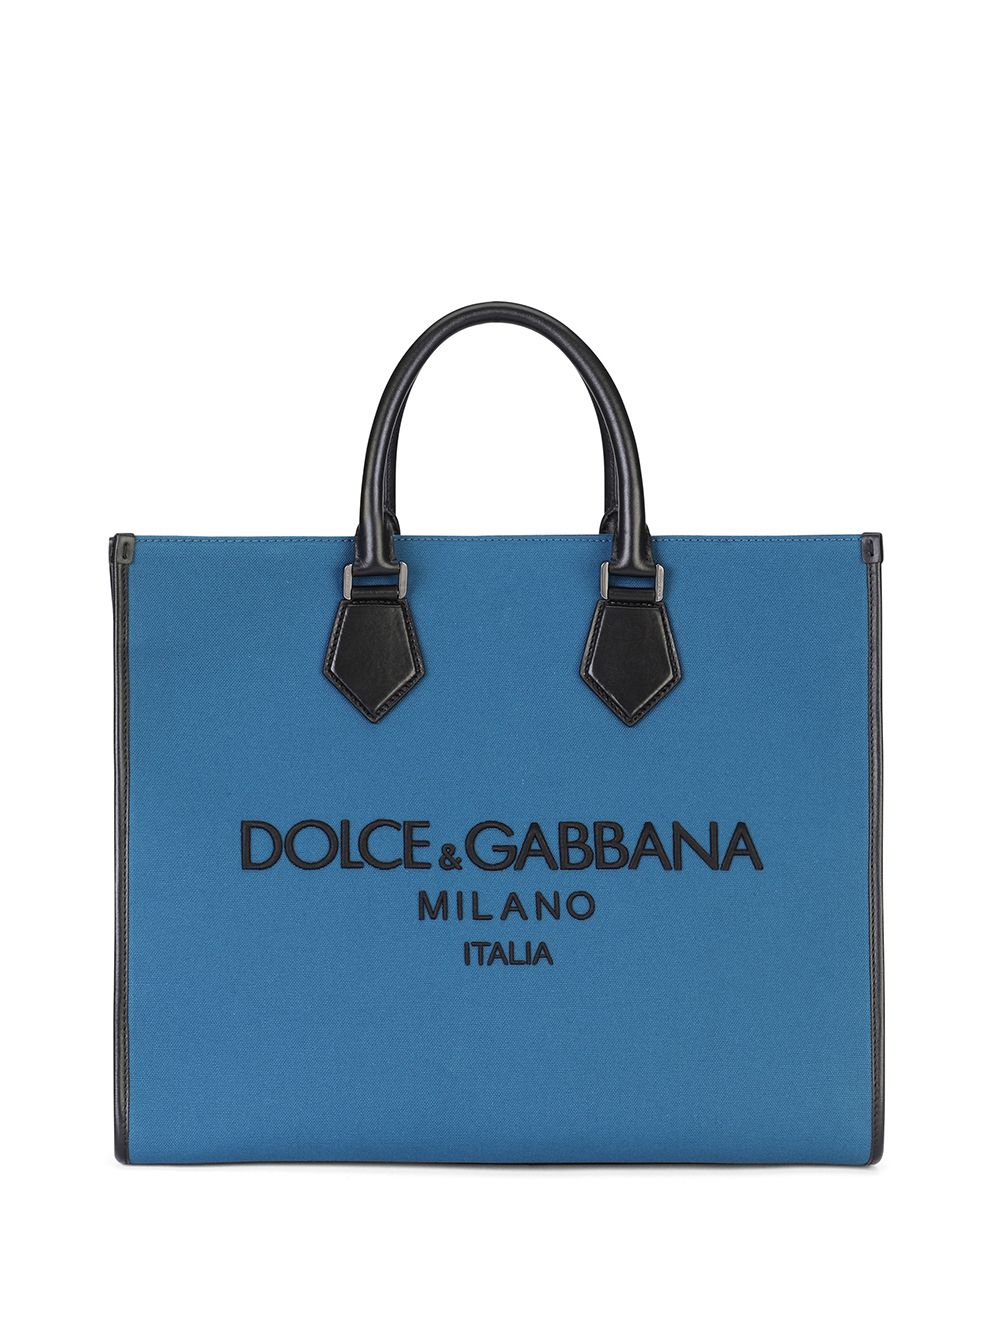 фото Dolce & gabbana сумка-тоут из канваса с вышитым логотипом